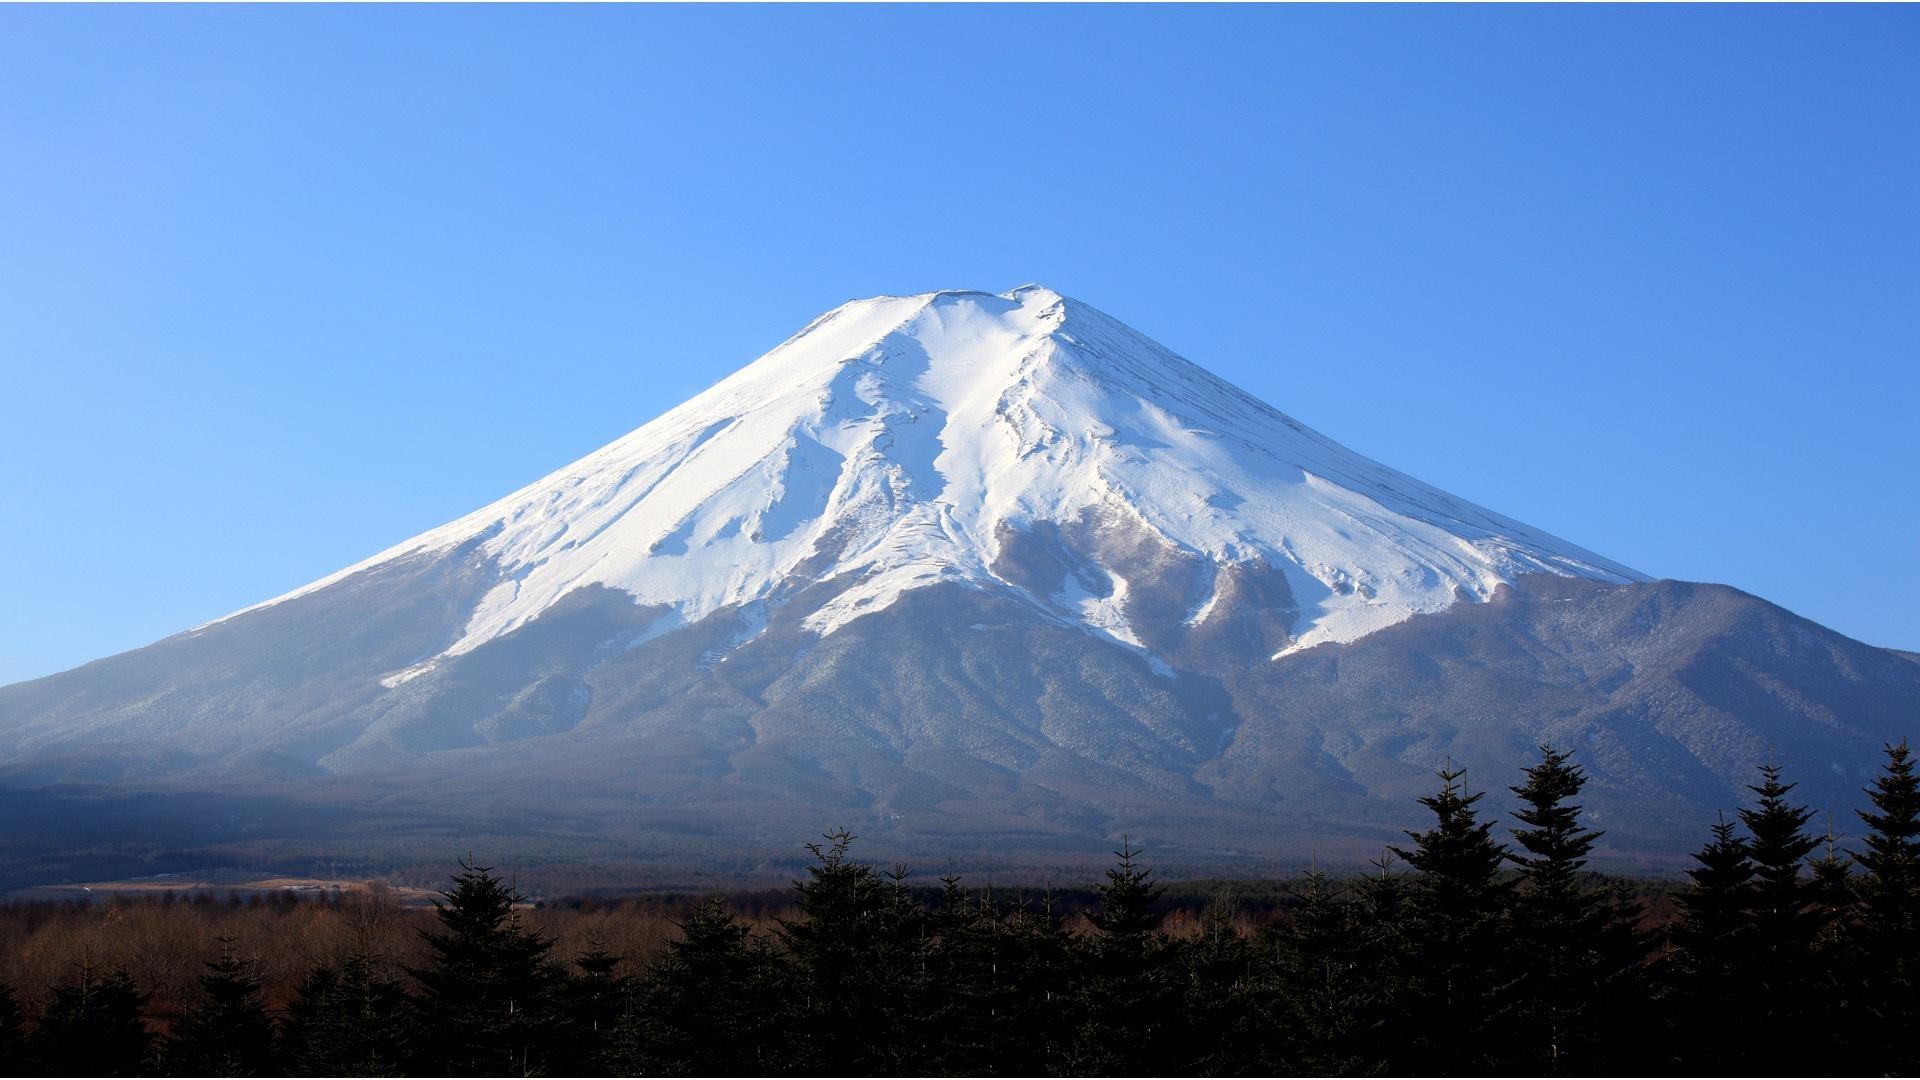 General 1920x1080 Mount Fuji Japan mountains volcano landscape nature Asia